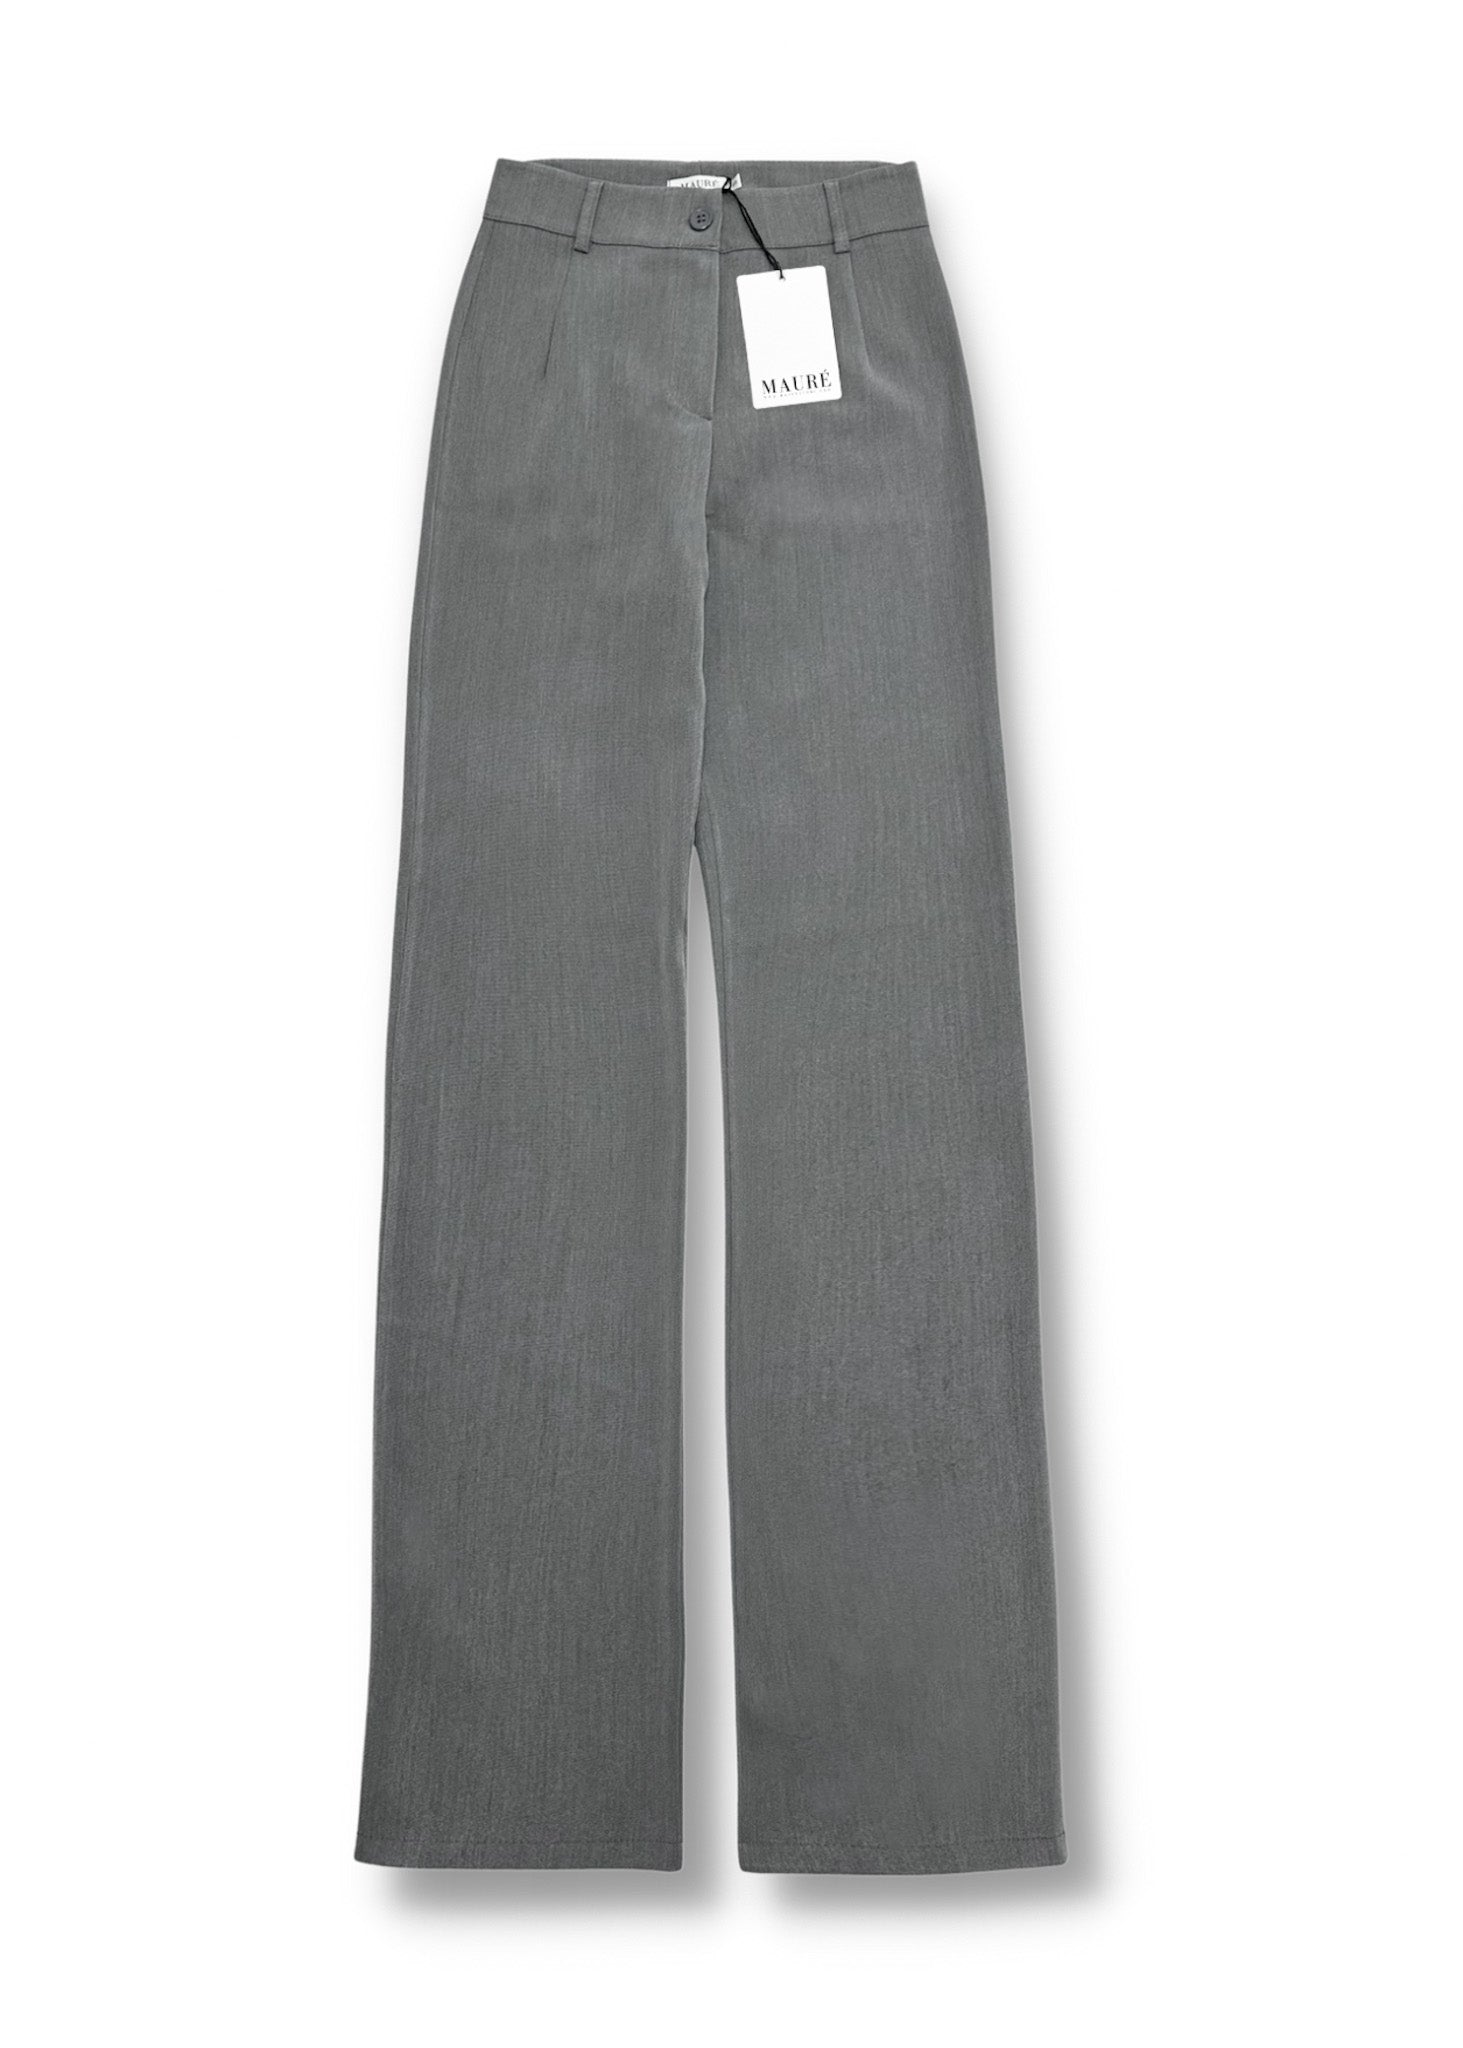 Straight leg pants classic light washed grey (TALL)